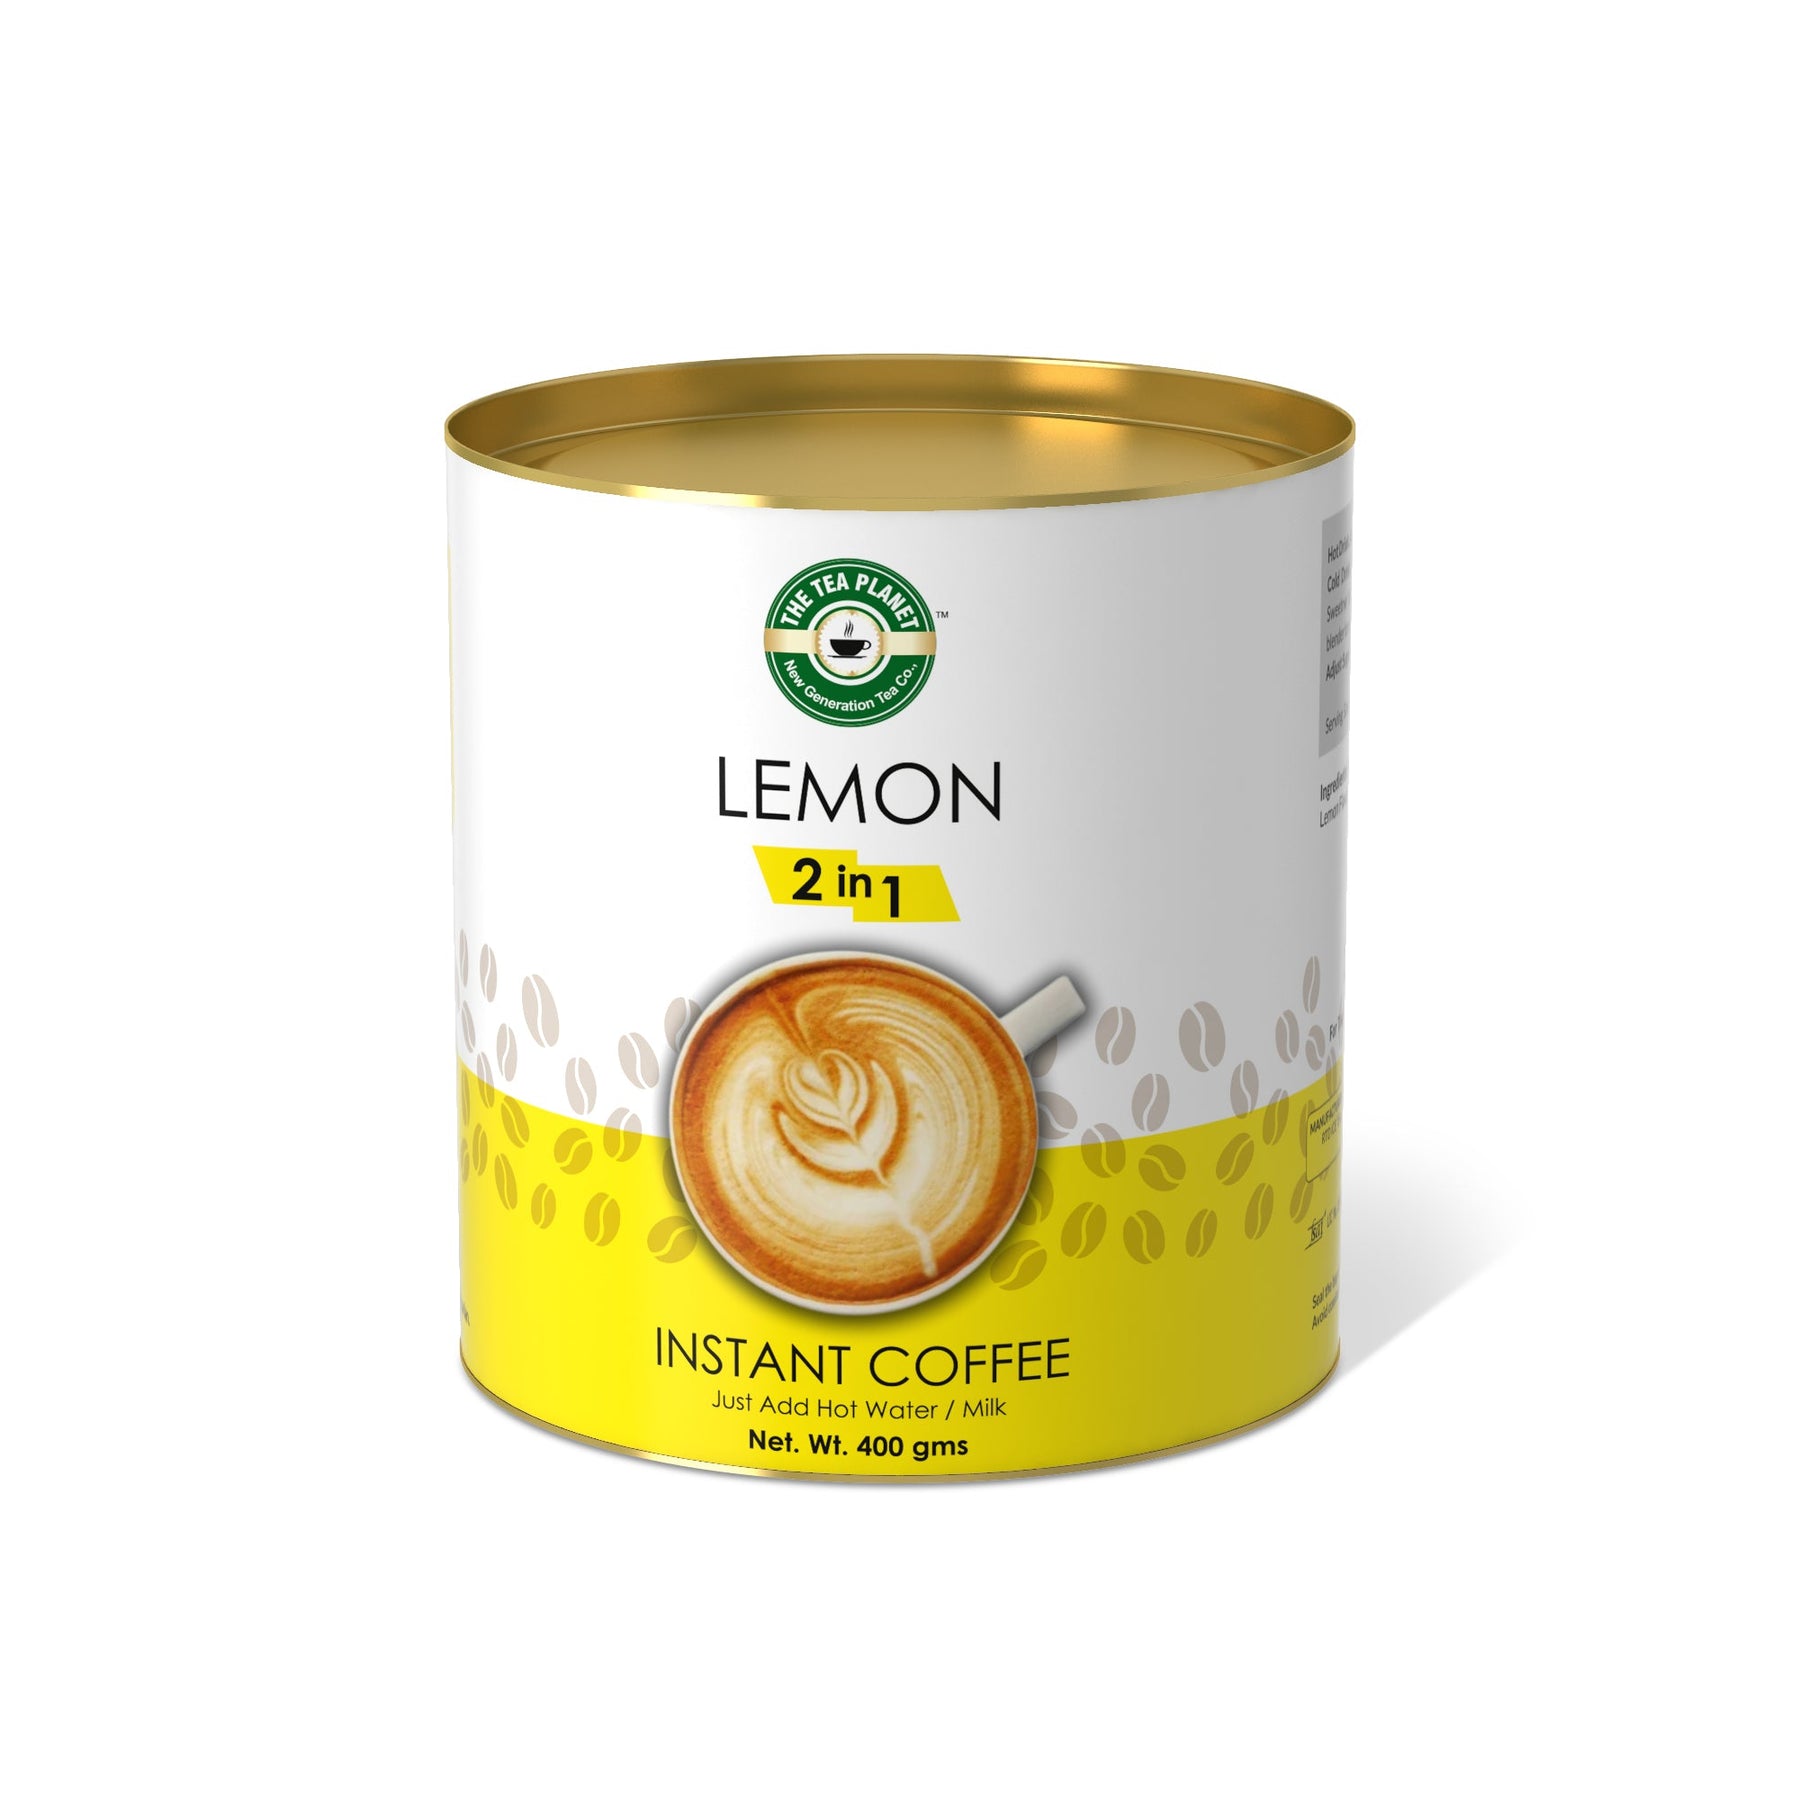 Lemon Coffee Instant Coffee Premix (2 in 1) - 250 gms